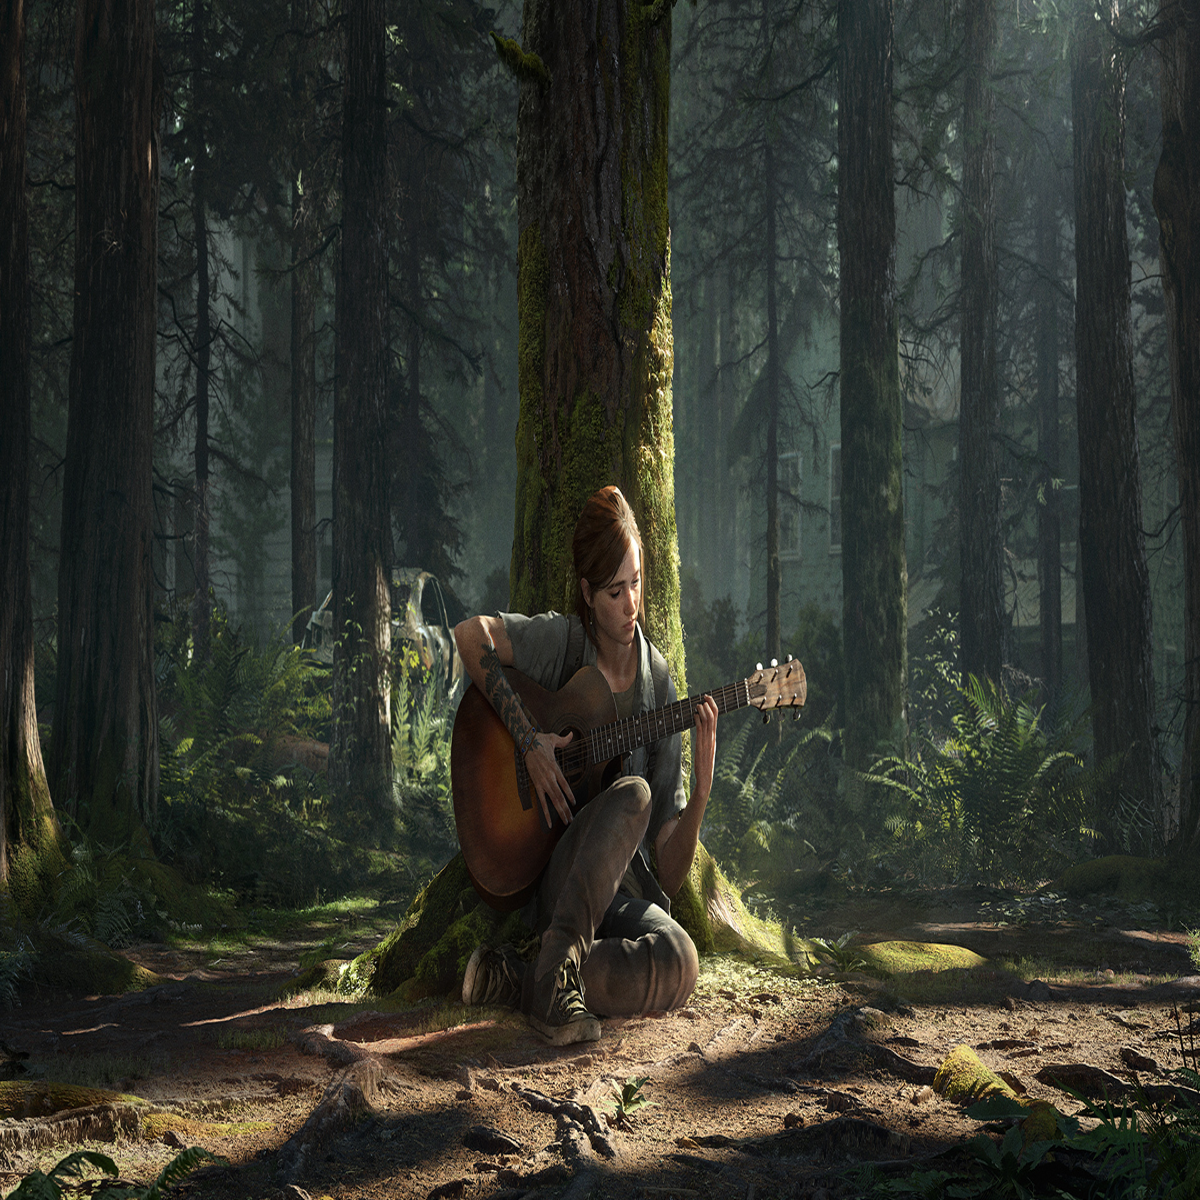 The Last of Us 2 - Take On Me (Ellie) Guitar Tutorial 